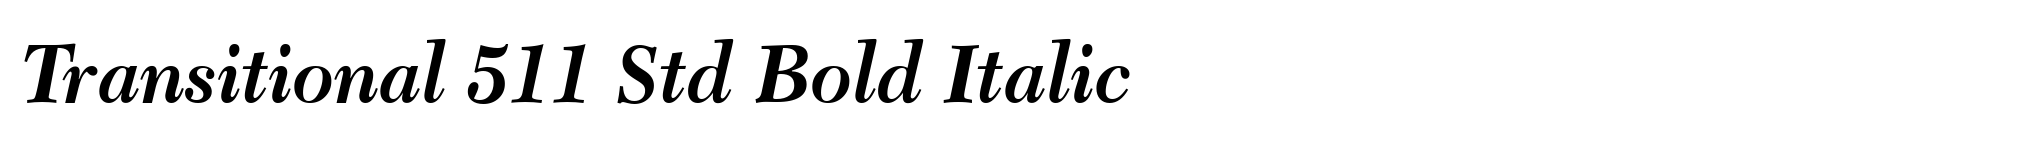 Transitional 511 Std Bold Italic image